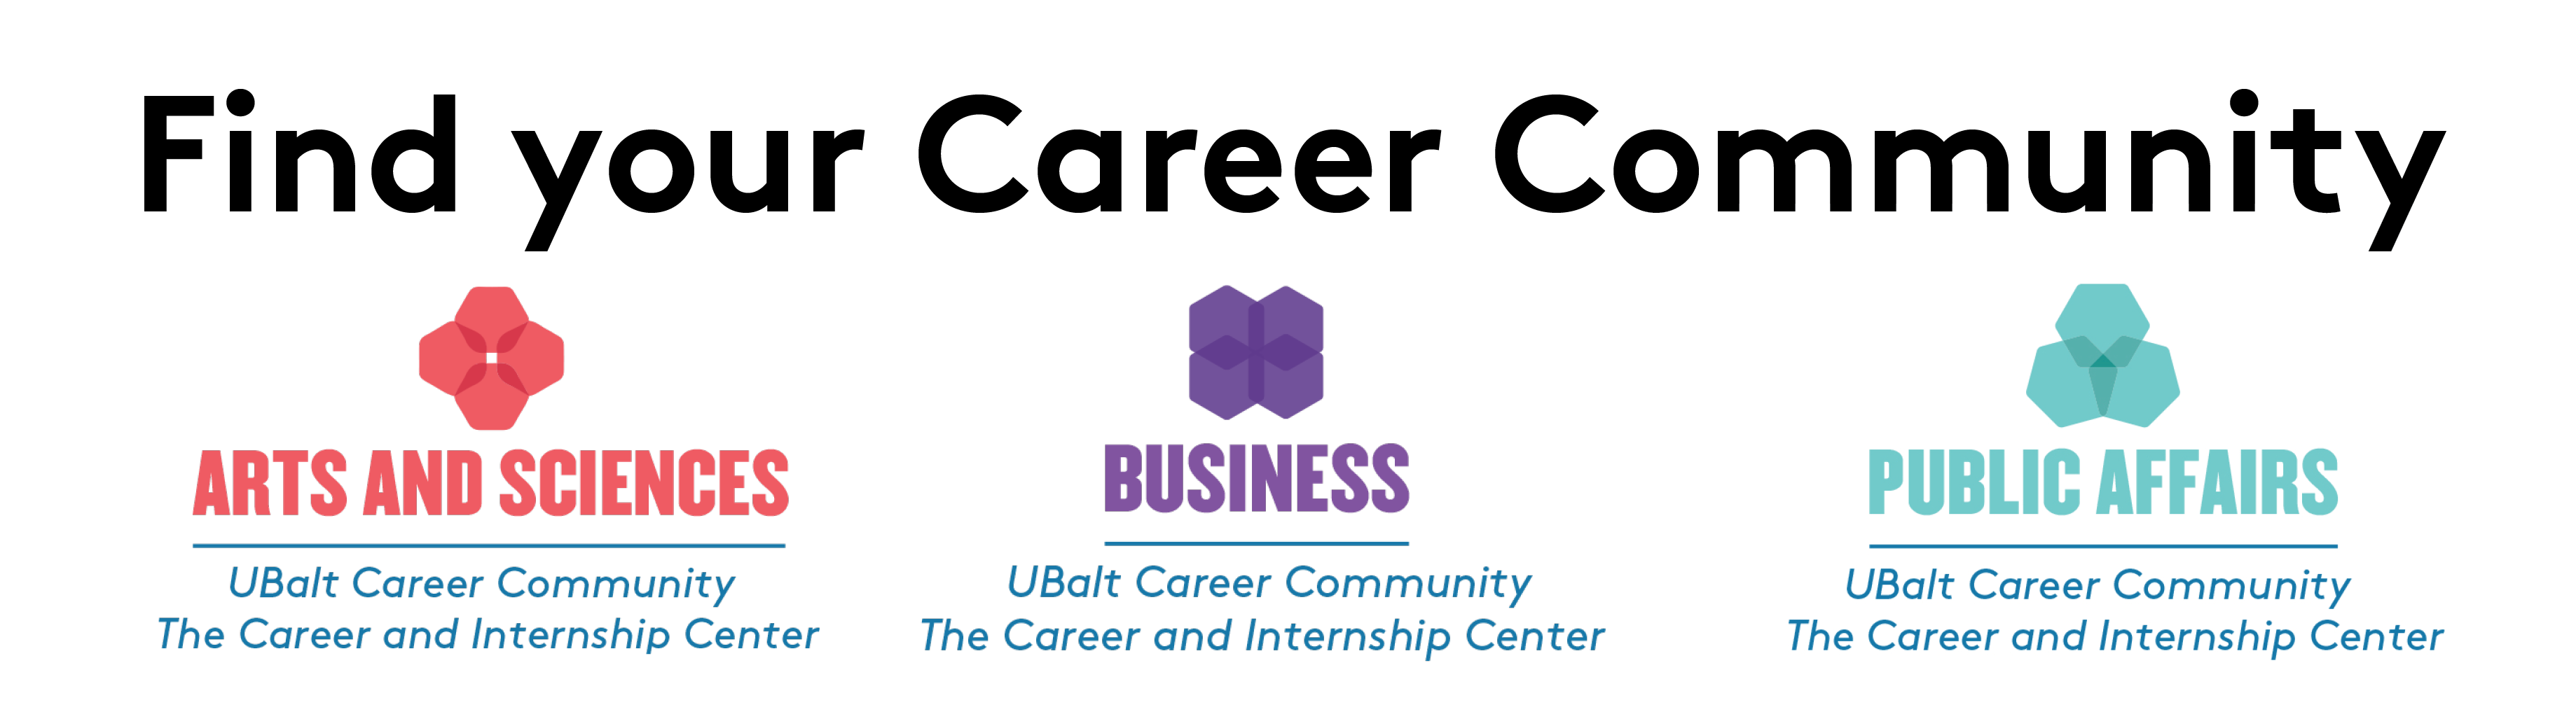 Career Community logos